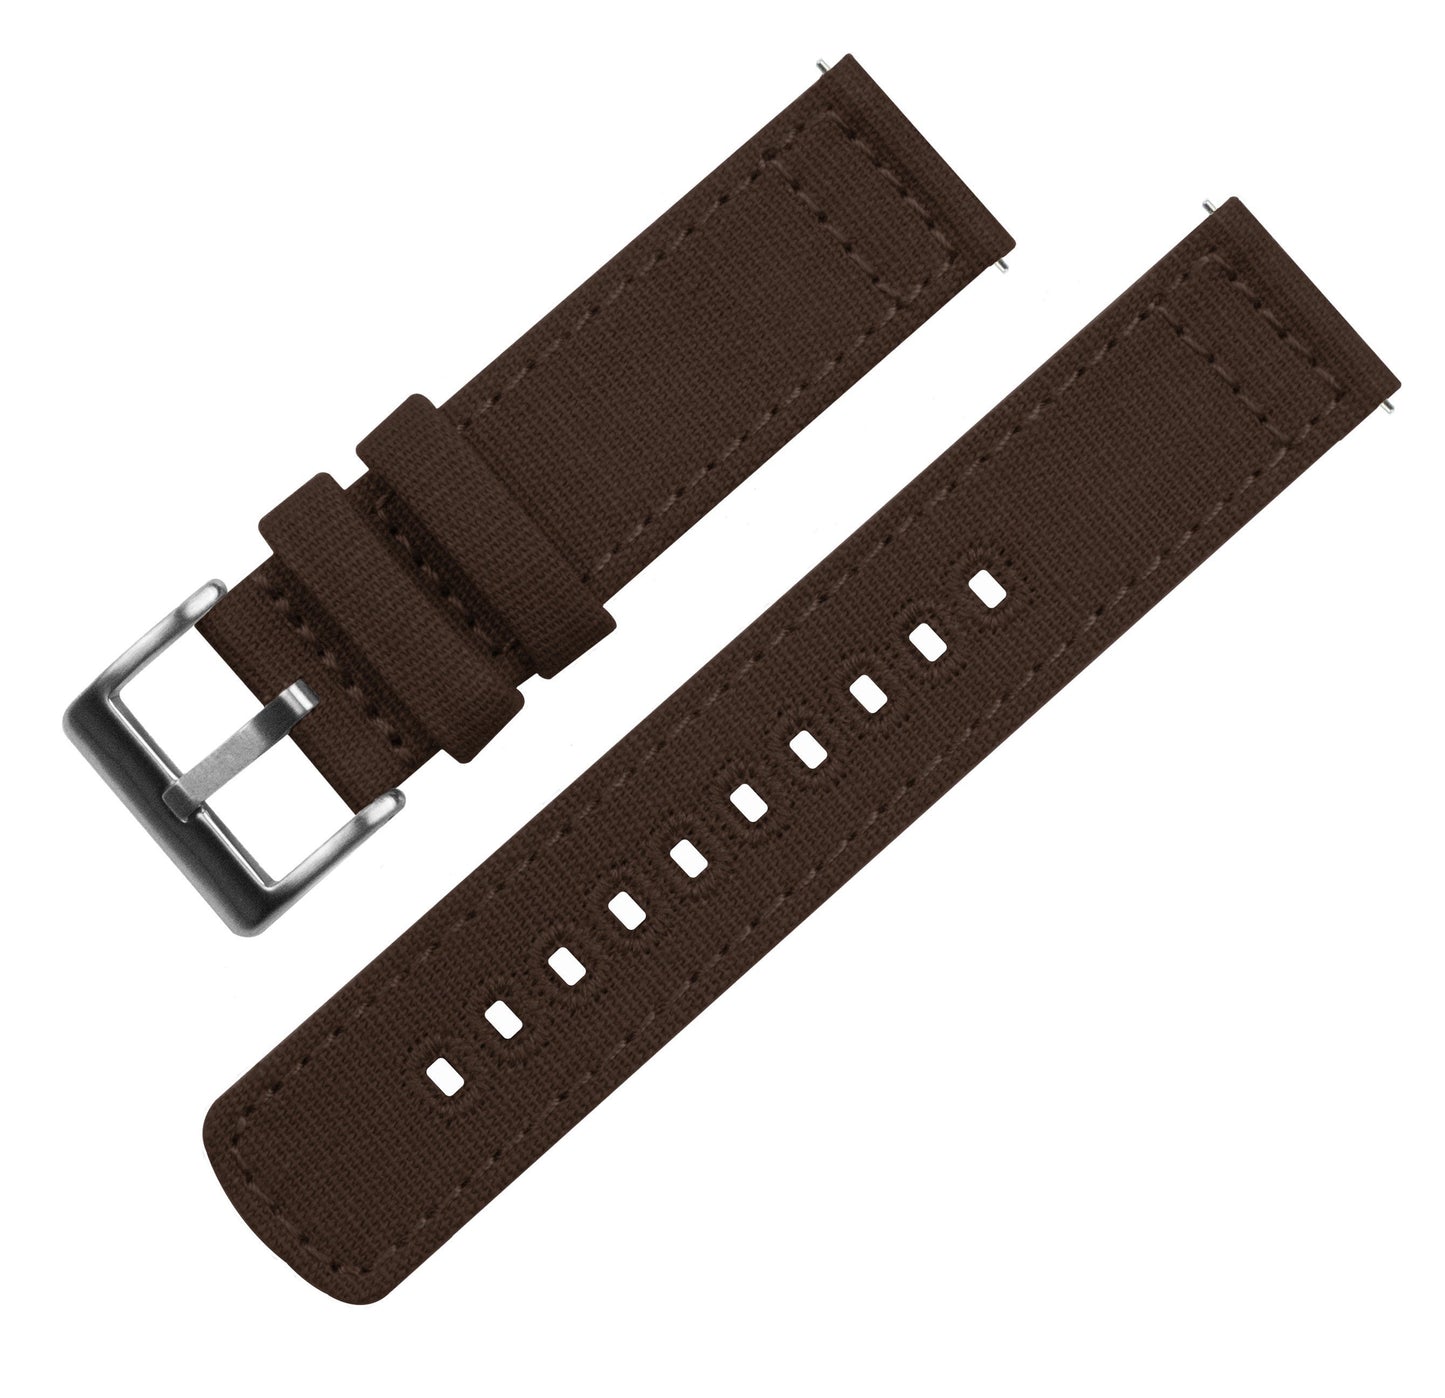 Samsung Galaxy Watch Active | Chocolate Brown Canvas - Barton Watch Bands